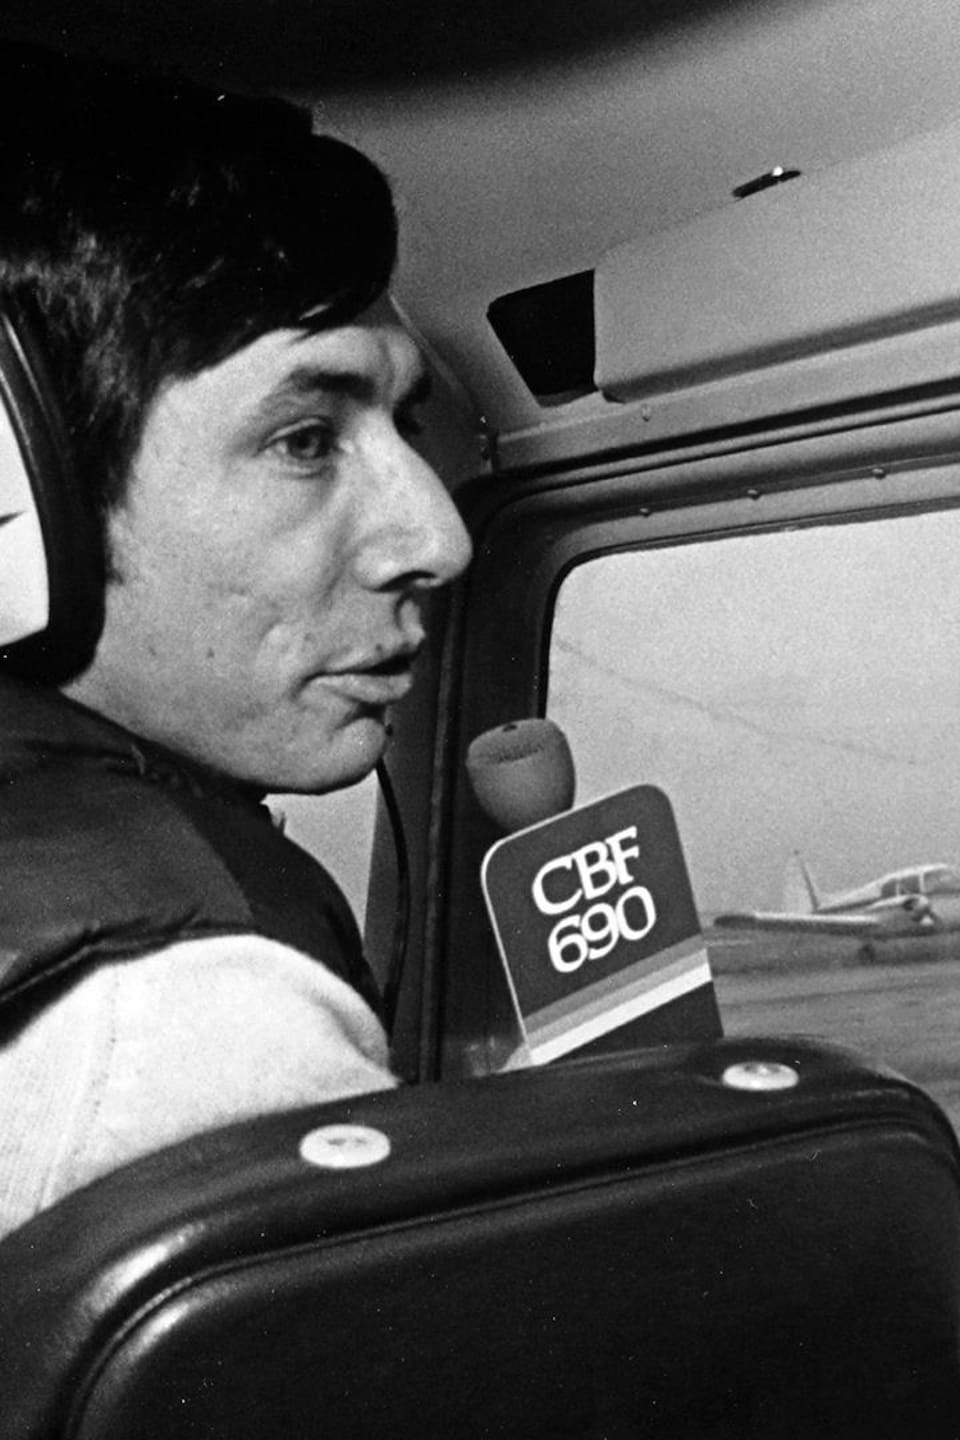 Roger Laroche à bord d'un petit avion, micro de CBF à la main.